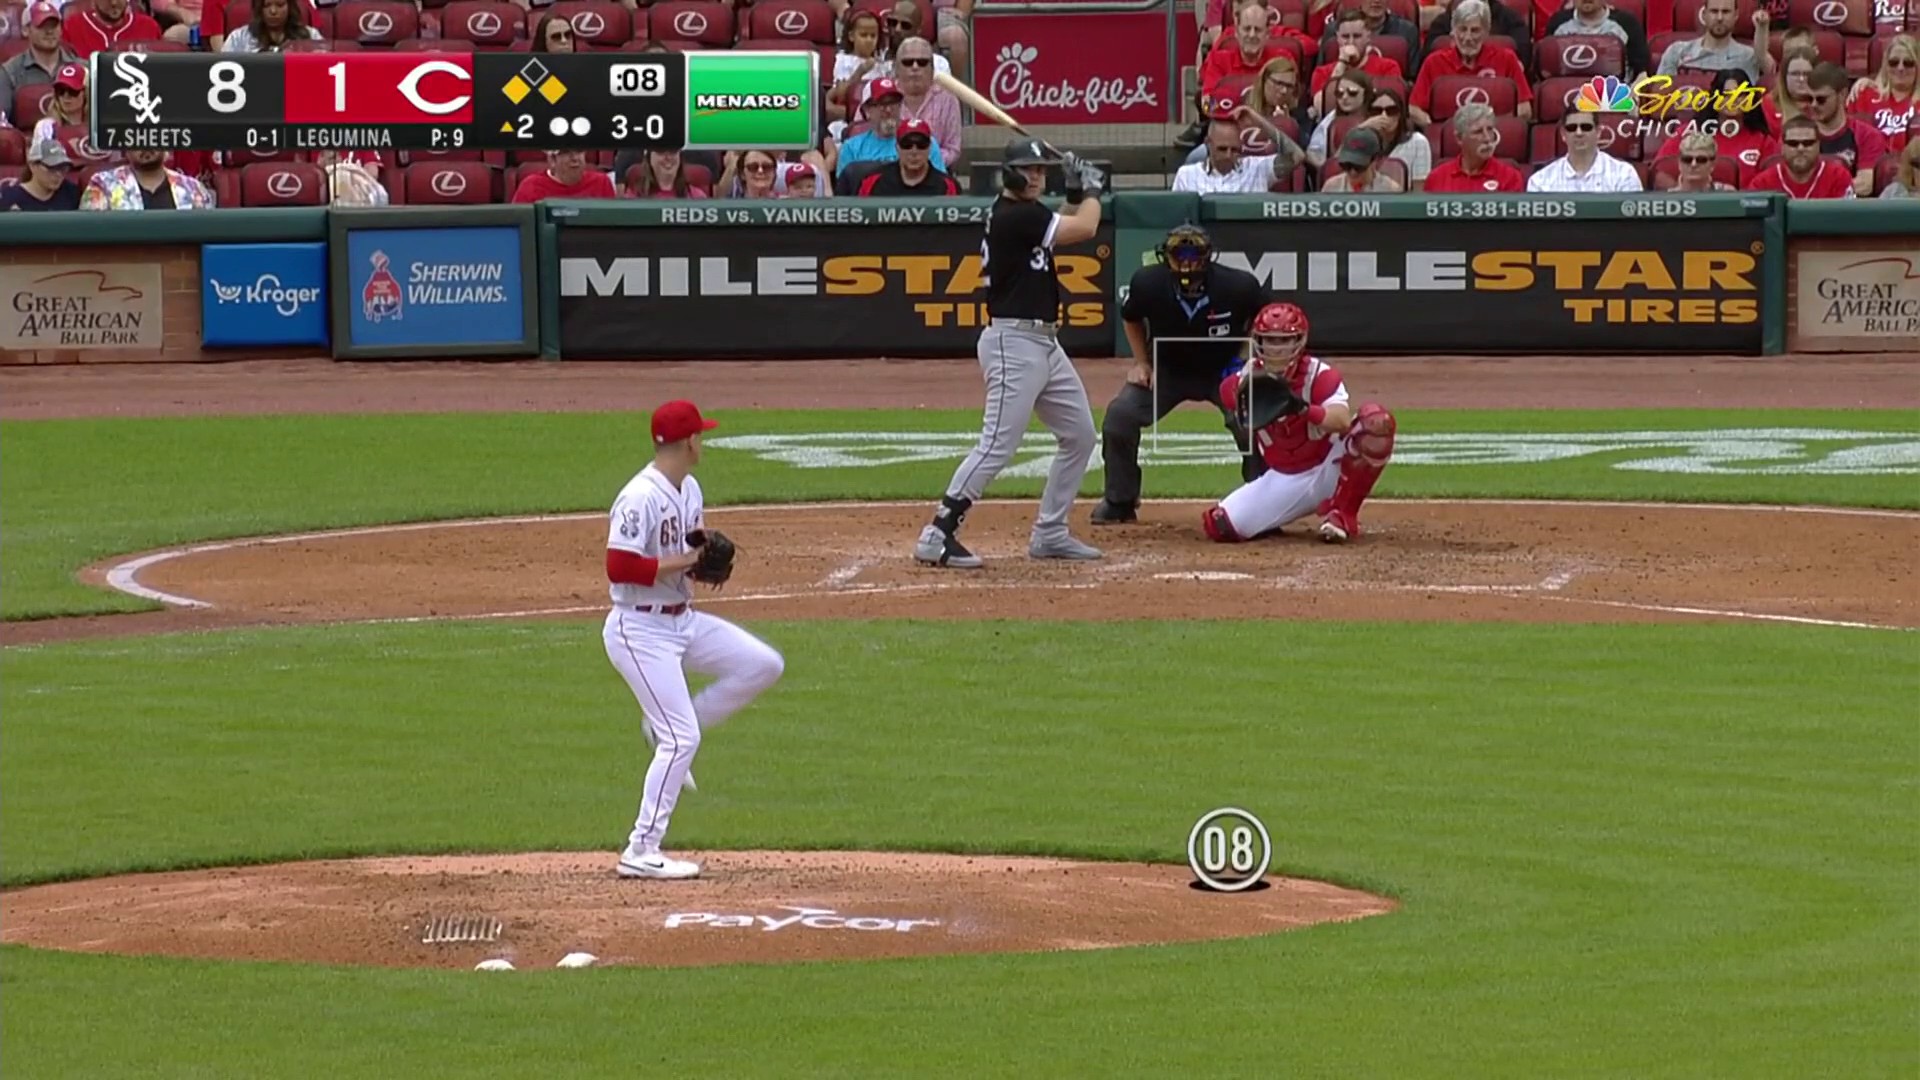 Gavin Sheets Home Run, home run, HOLY SHEETS!, By Chicago White Sox